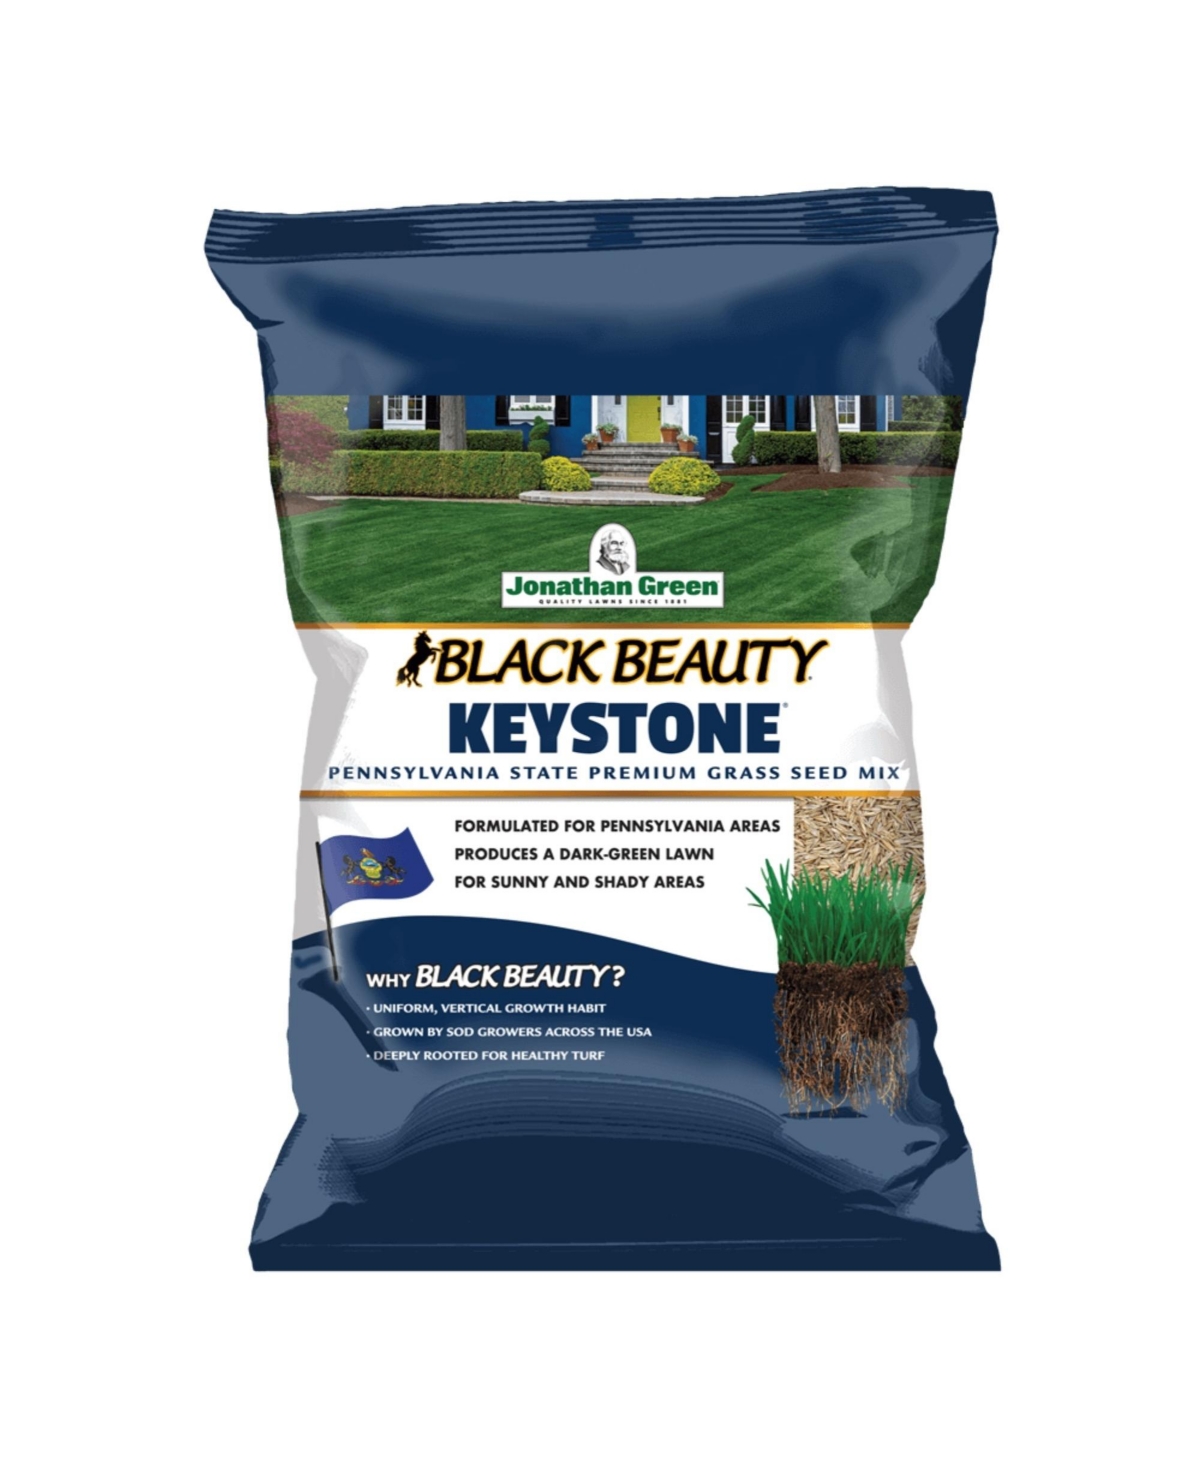 Black Beauty Keystone Pennsylvania Grass Seed Mix, 7lb - Brown